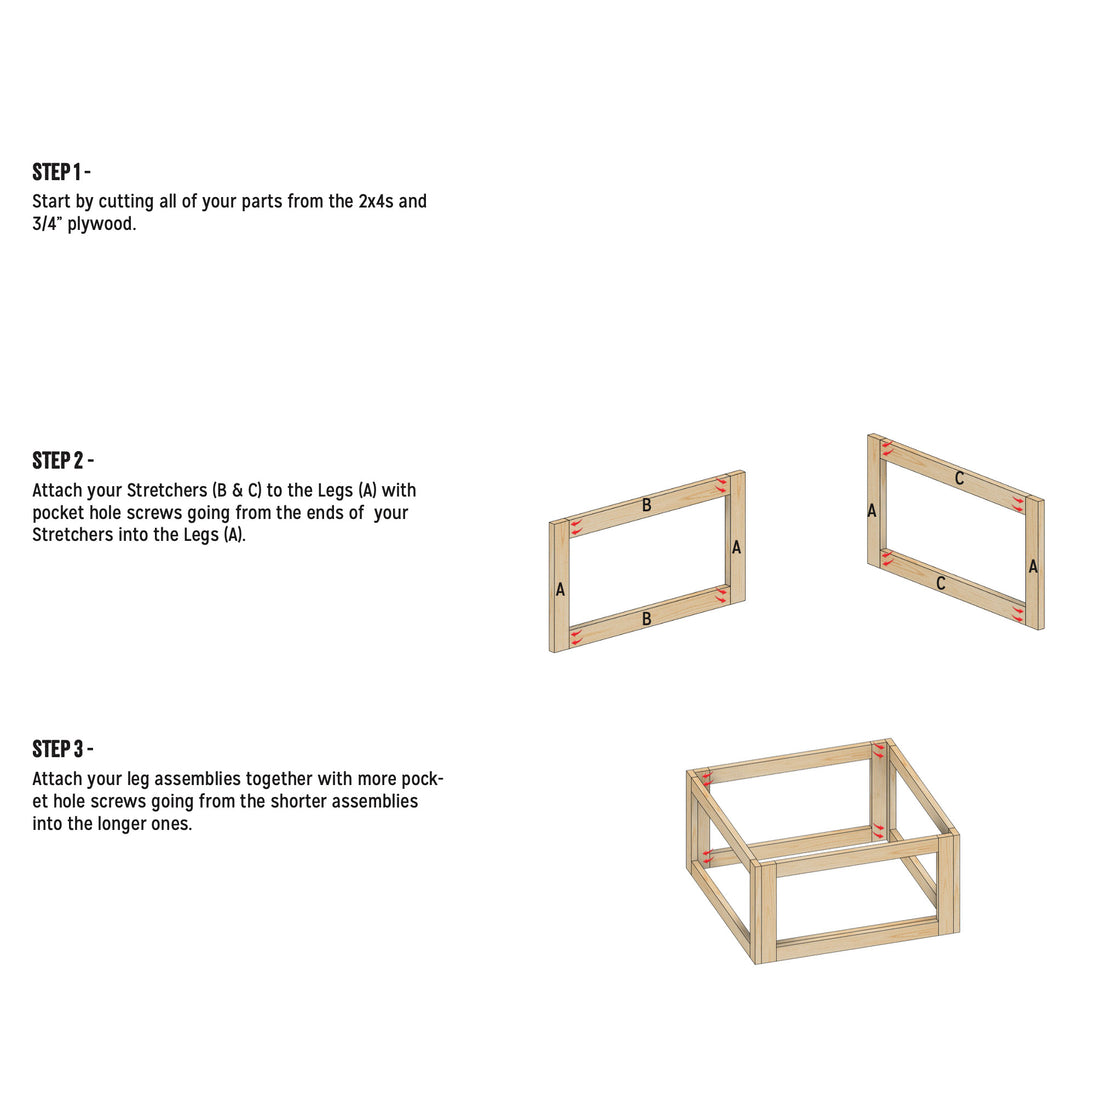 4'x4' Beginner Workbench with Storage Plan - John Malecki Store